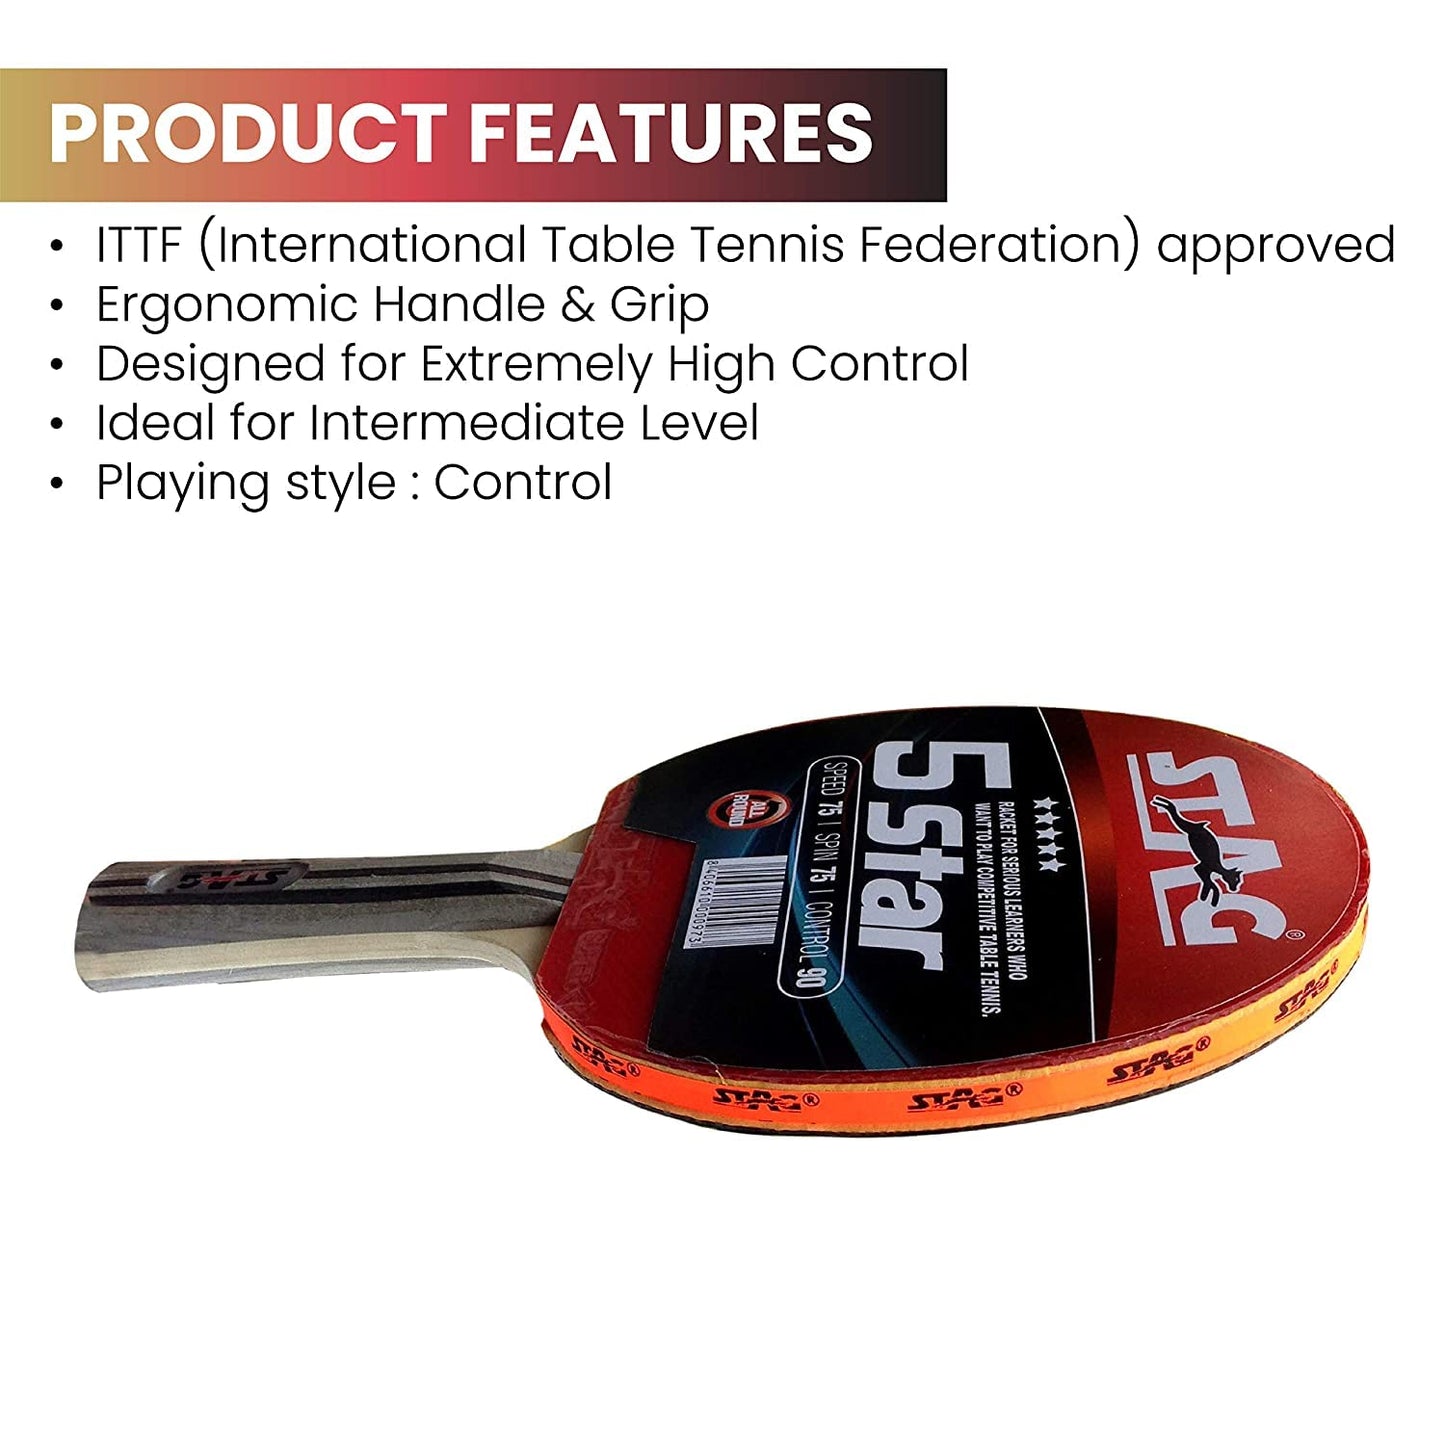 Stag 5 Star Table Tennis Racket, Red/Black - Best Price online Prokicksports.com